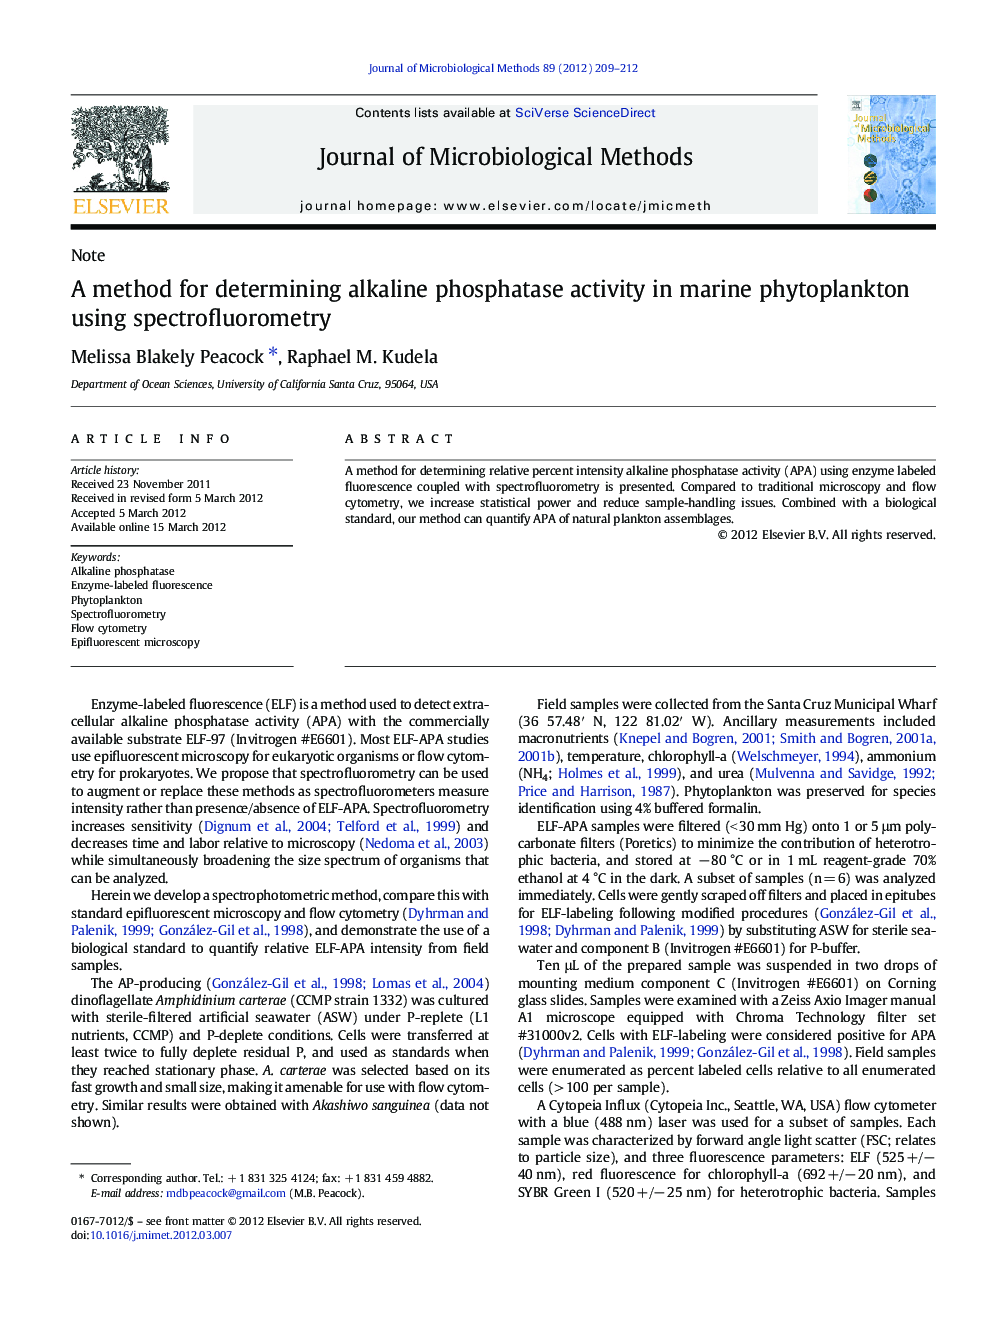 A method for determining alkaline phosphatase activity in marine phytoplankton using spectrofluorometry